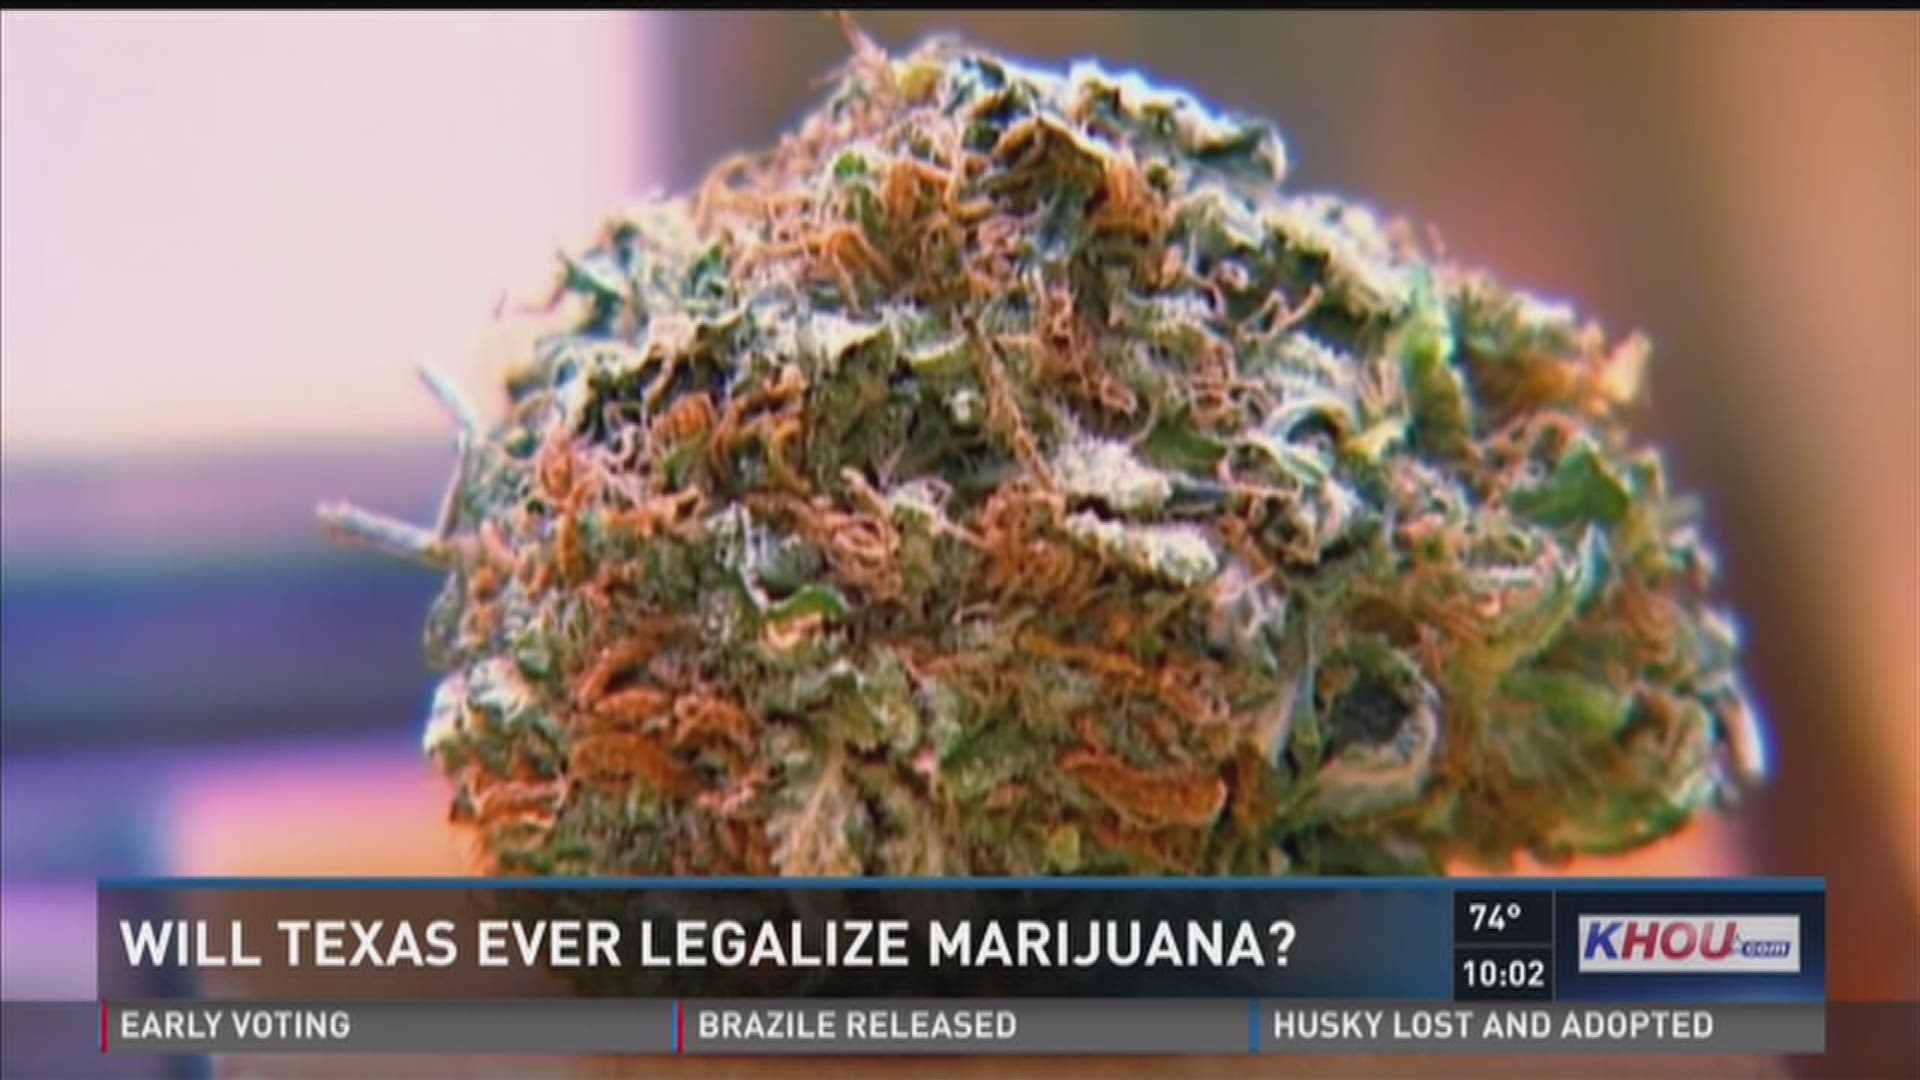 Will Texas legalize marijuana?